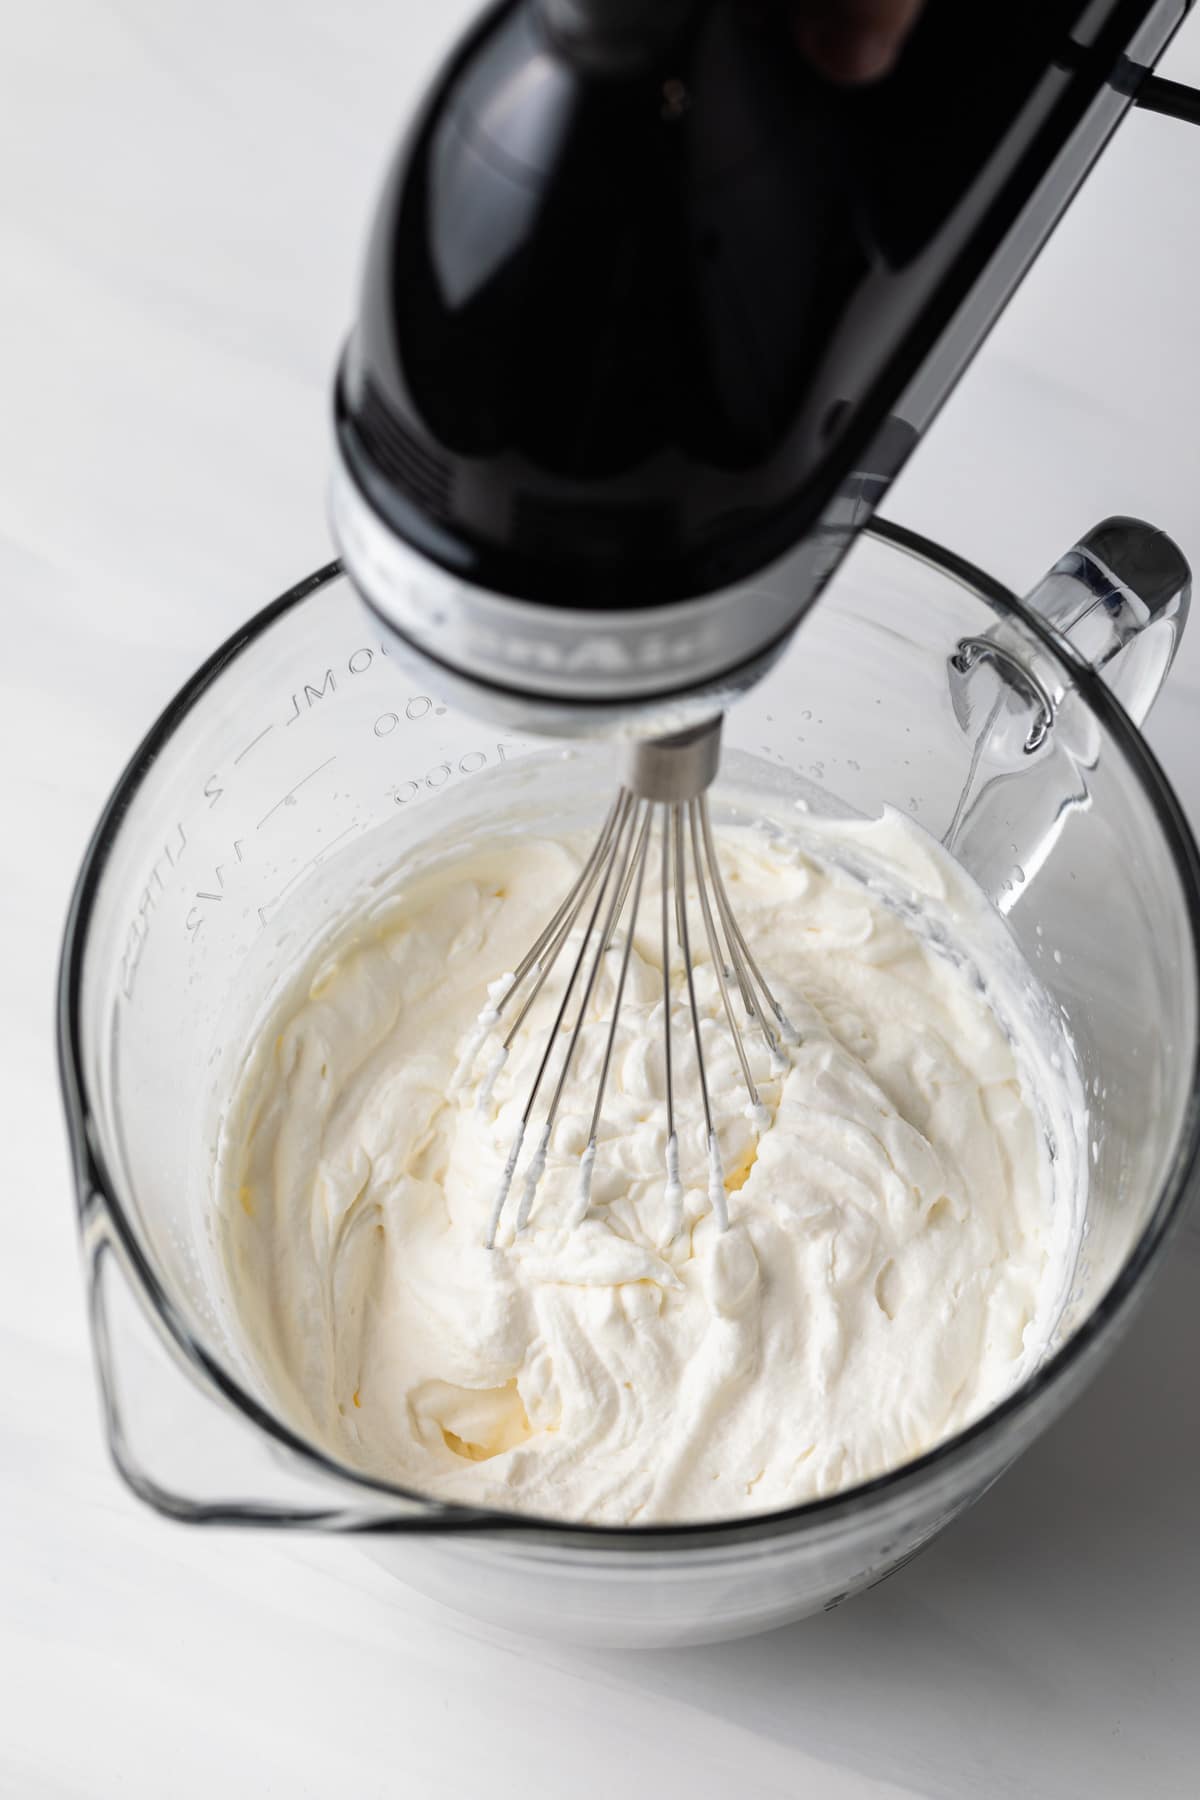 mixer whipping cream to stiff peaks